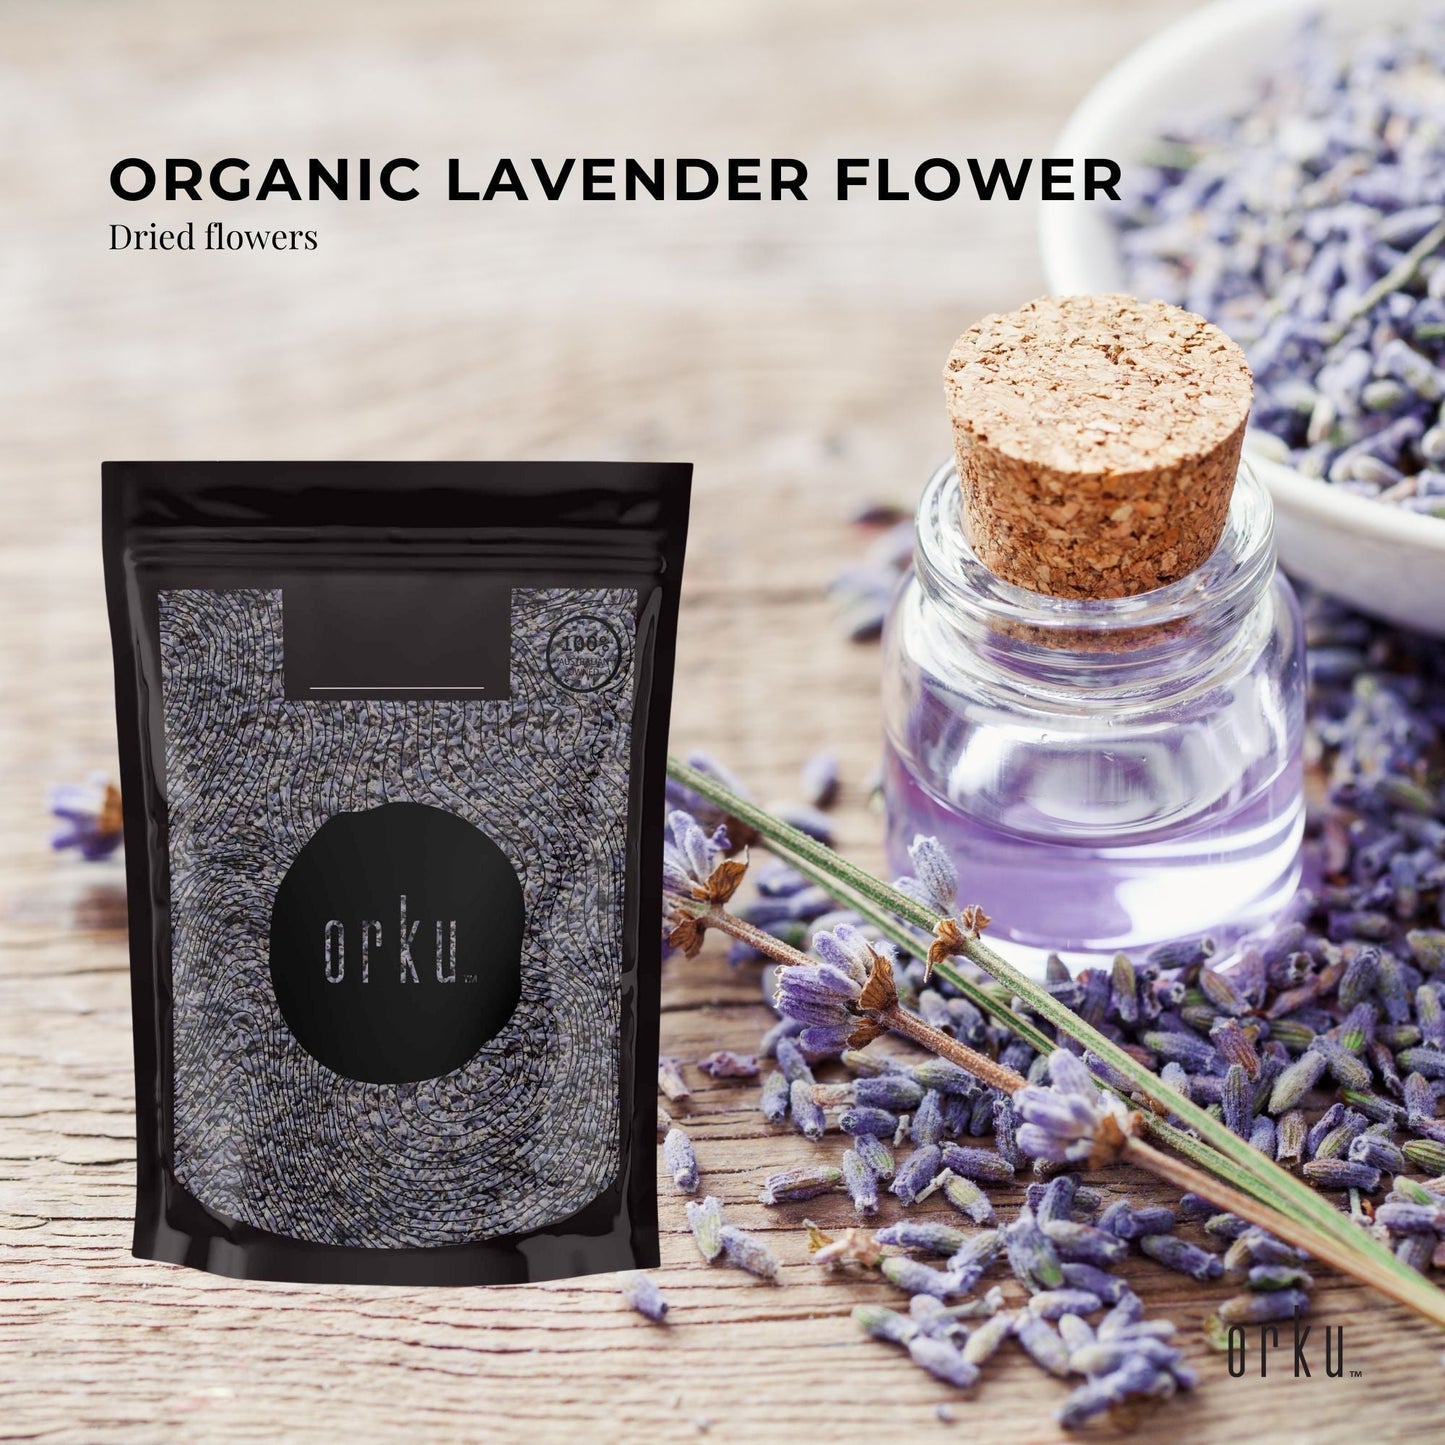 50g Organic Lavender Flower - Dried Fragrant Lavendula Angustifolia